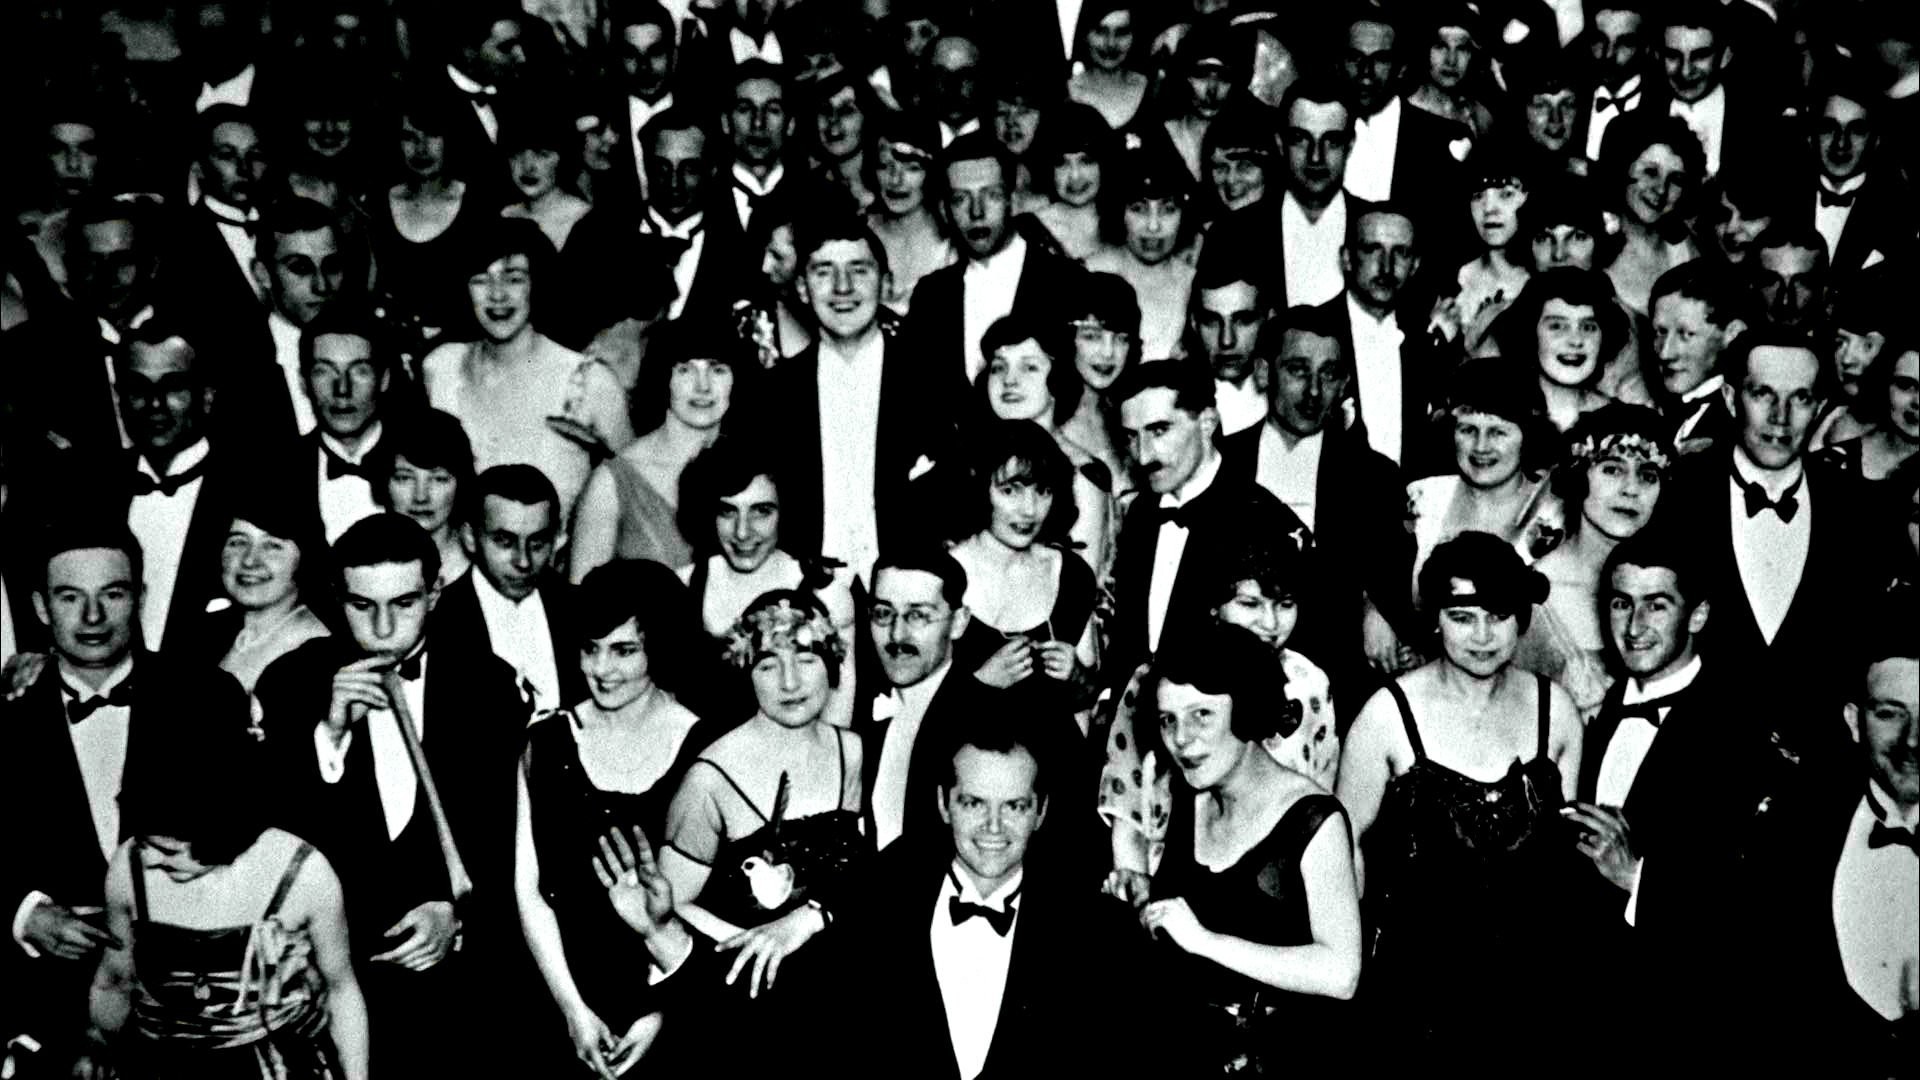 1920x1080 THE SHINING horror thriller dark movie film classic crowd death ghost dead  wallpaper |  | 253370 | WallpaperUP